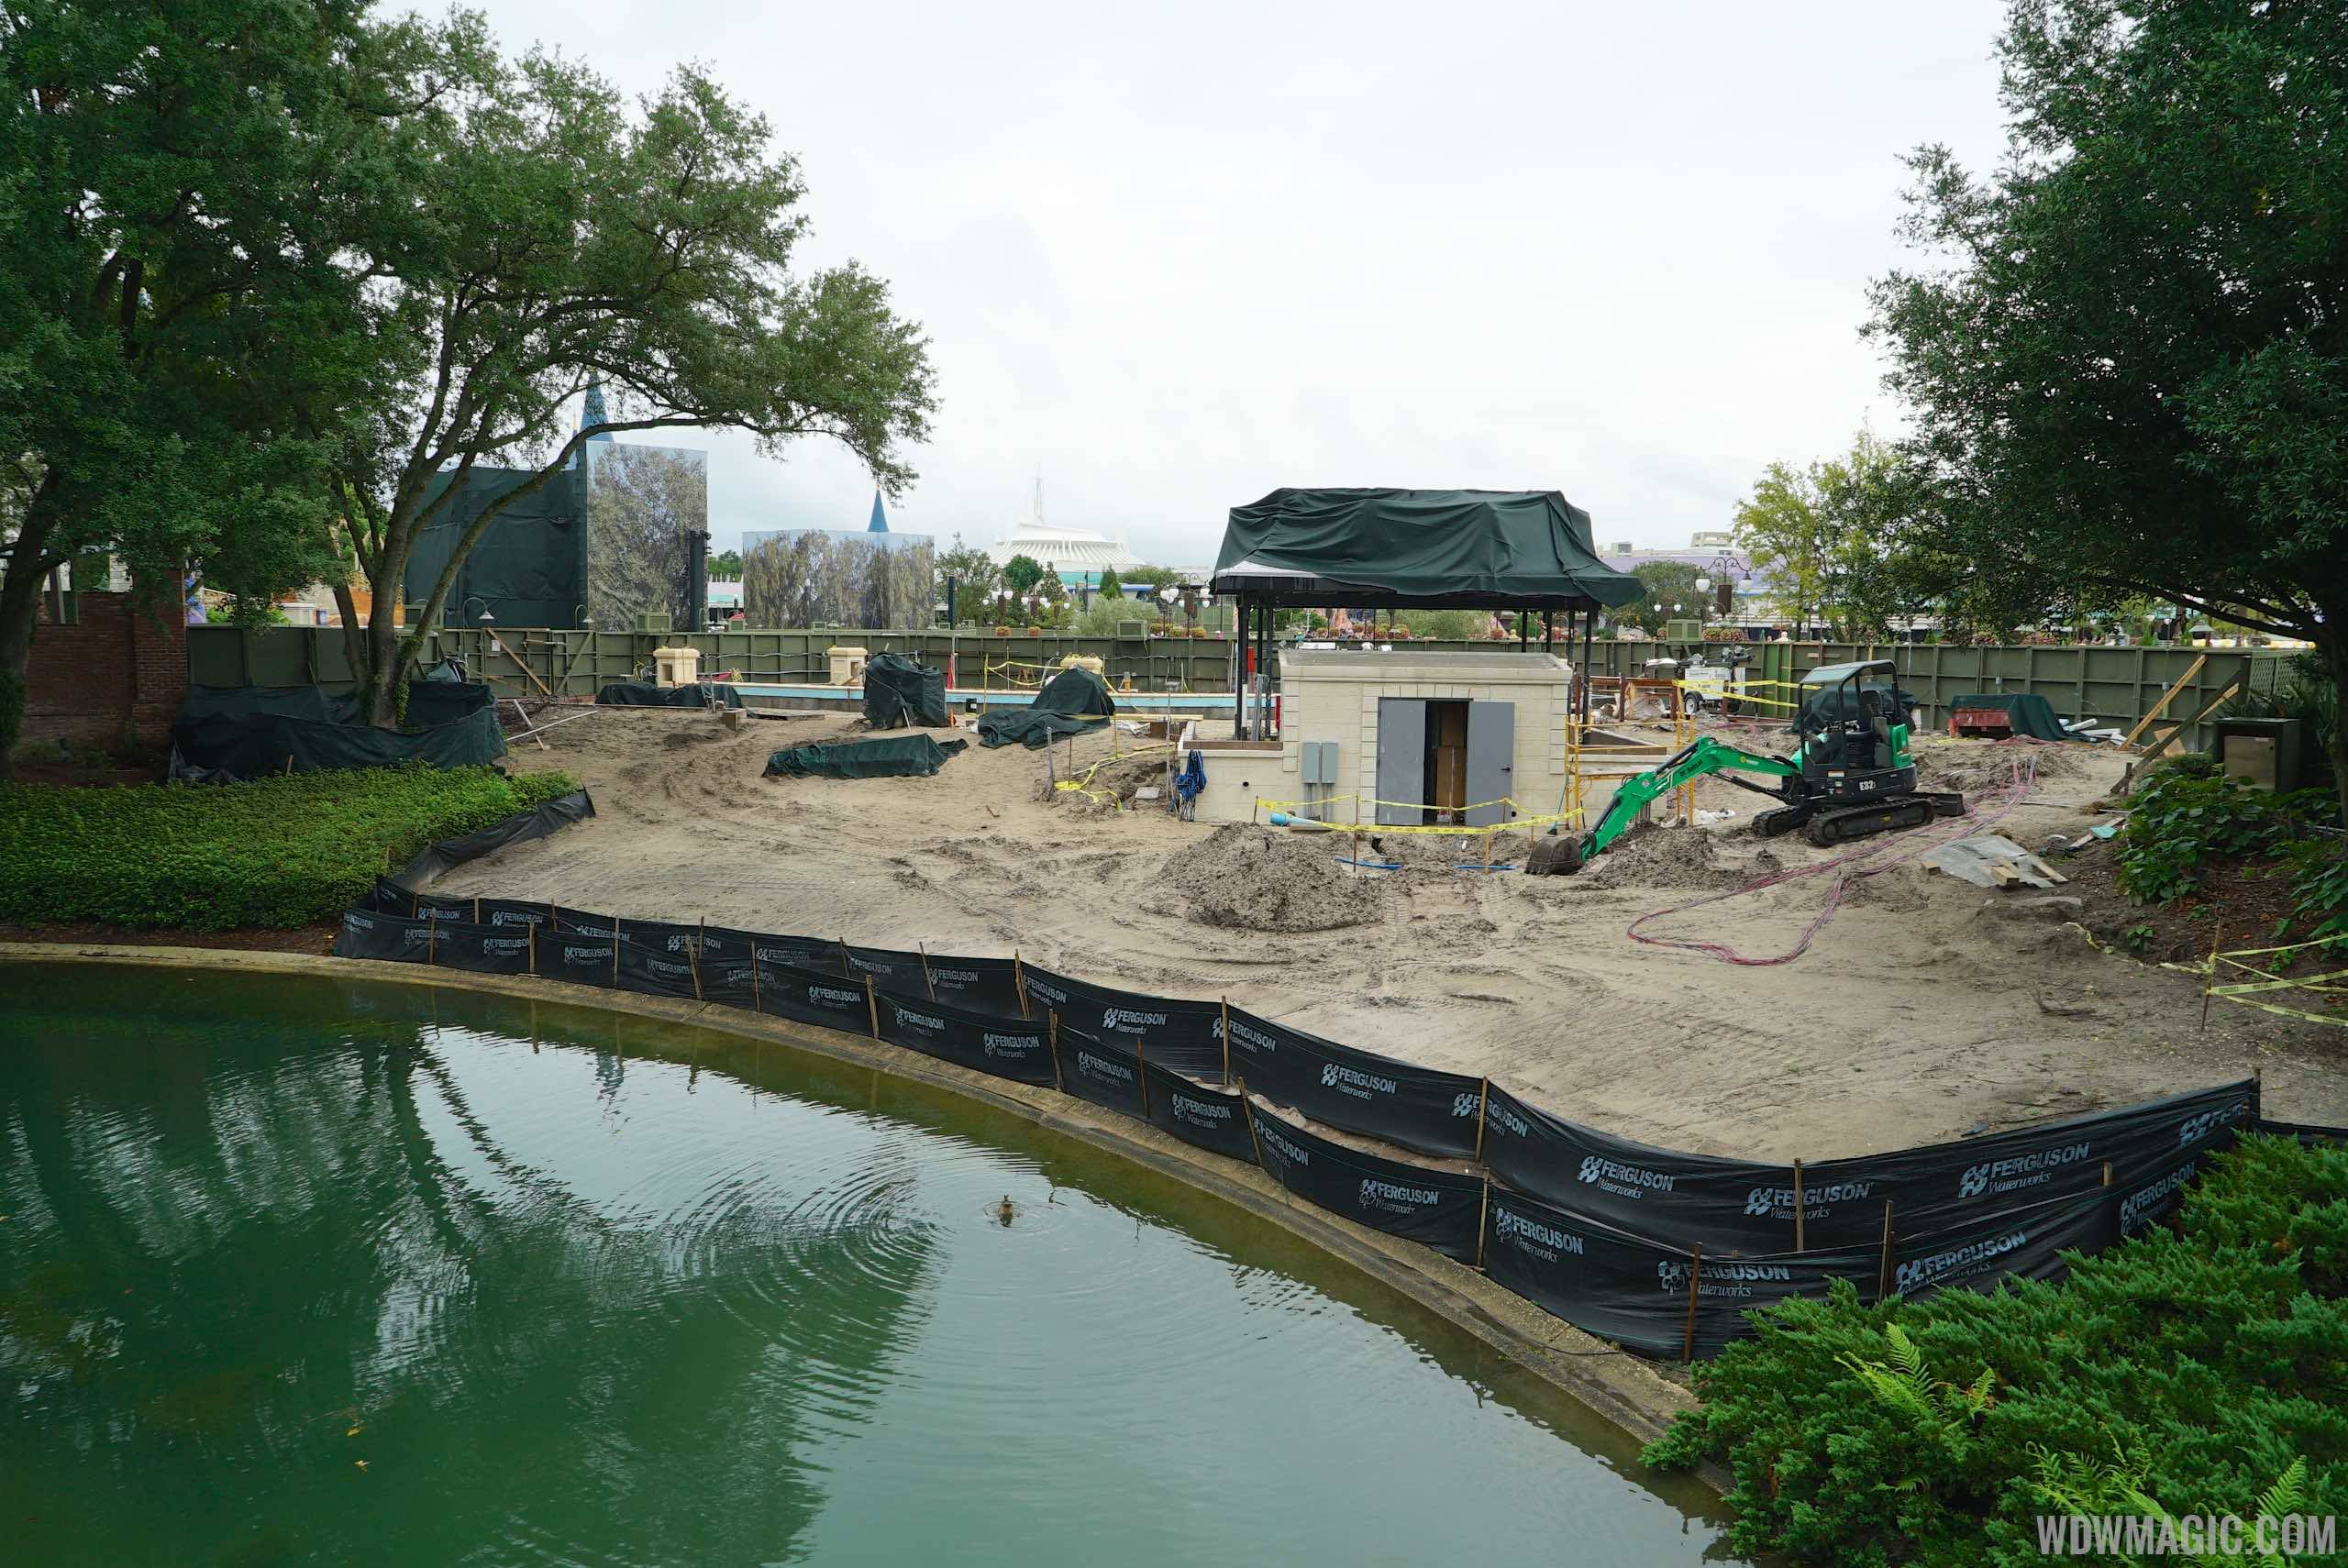 PHOTOS - Magic Kingdom central hub walkway construction update